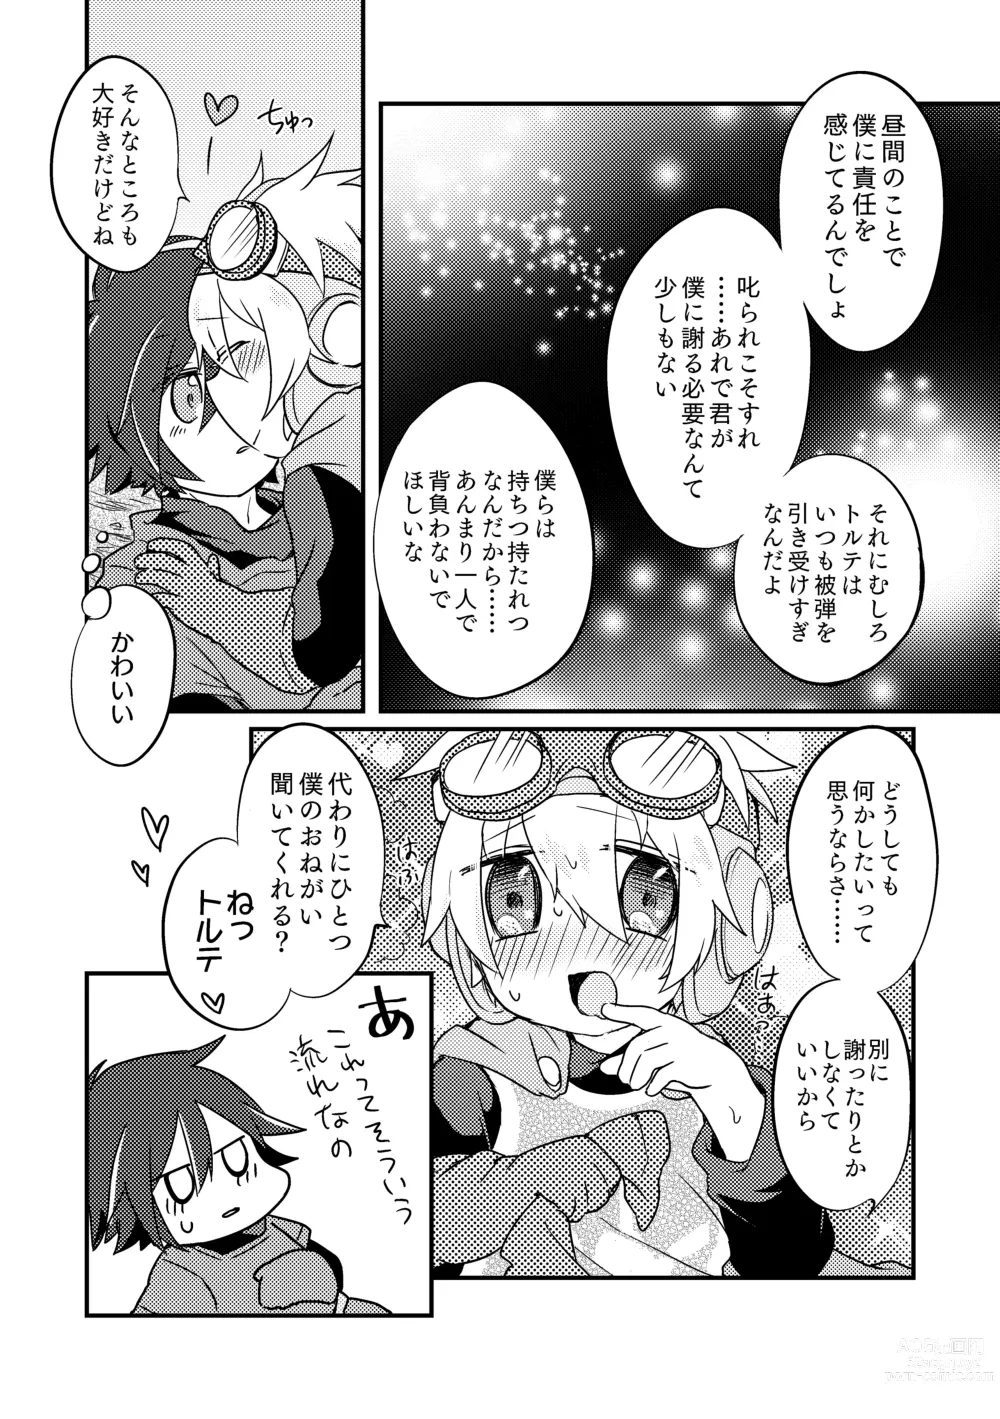 Page 13 of doujinshi Enka